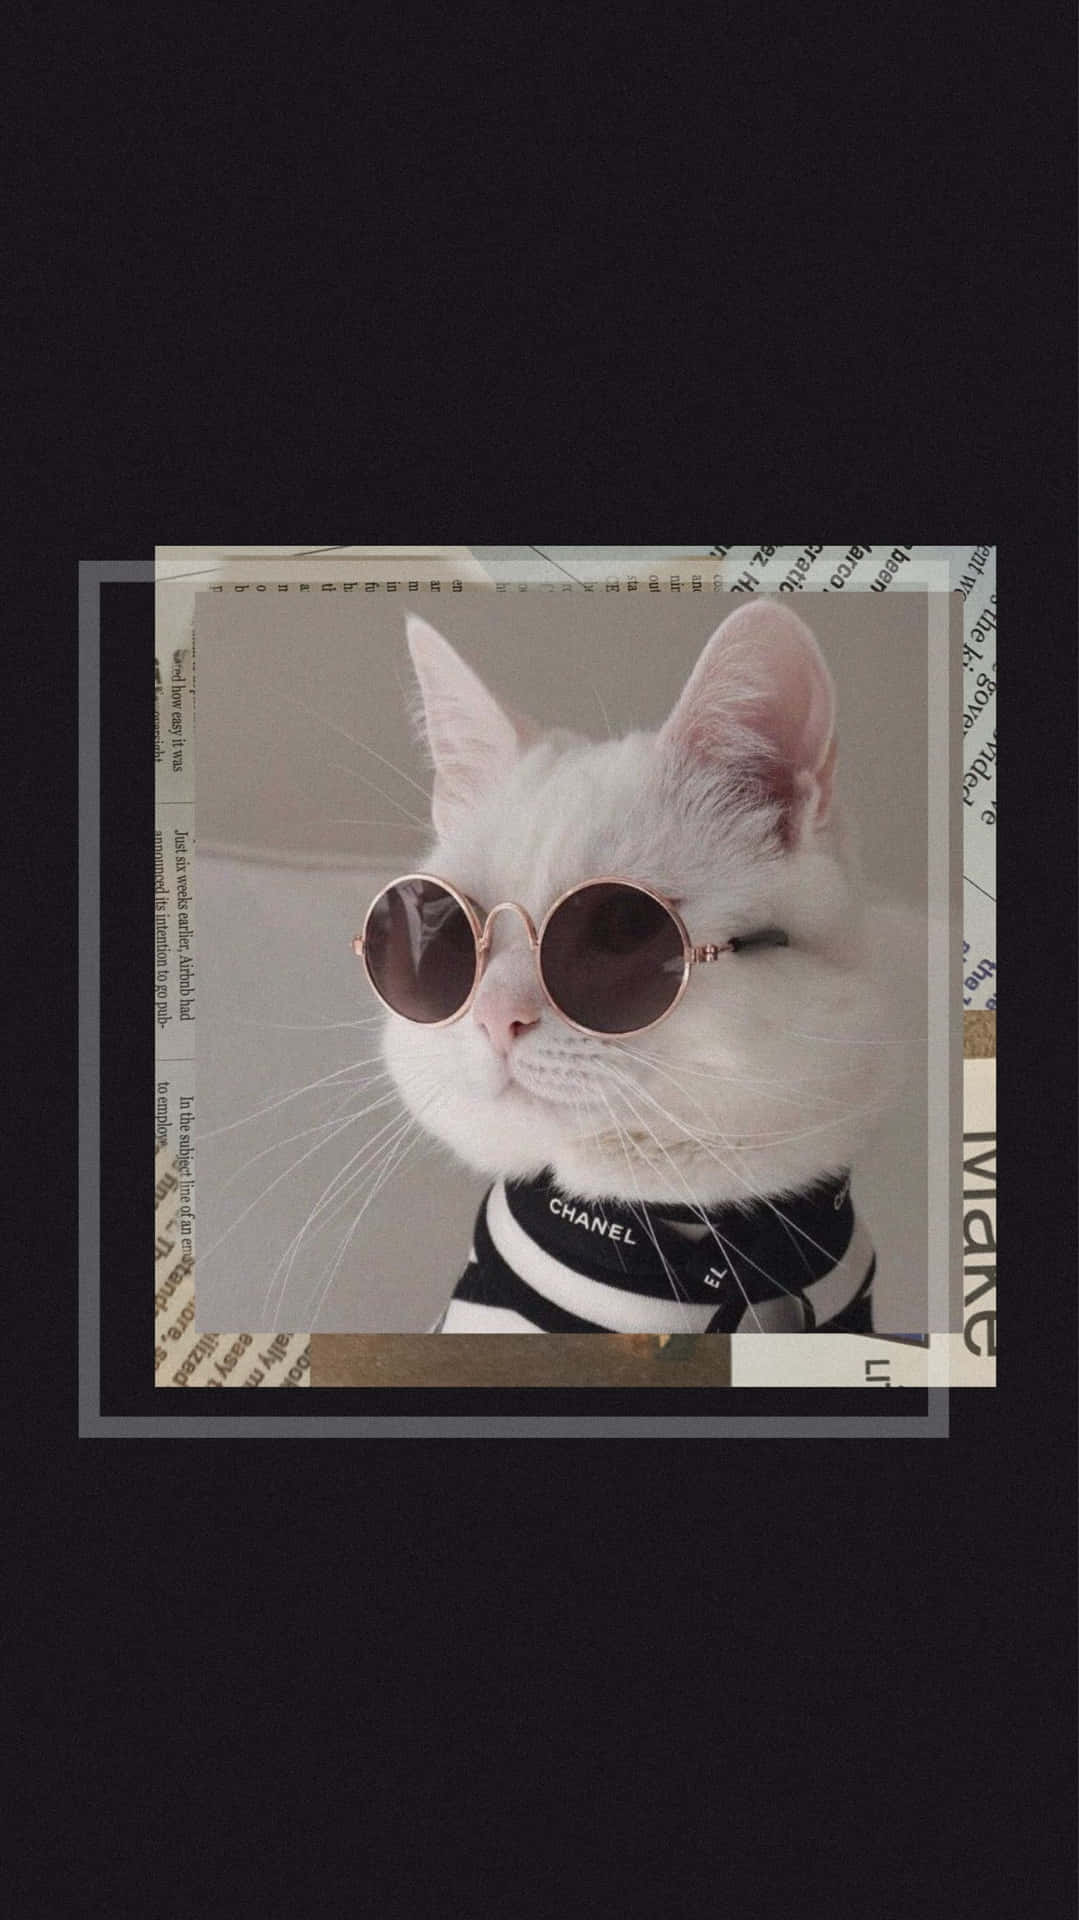 Download Boss Cat With Sunglasses Wallpaper | Wallpapers.com